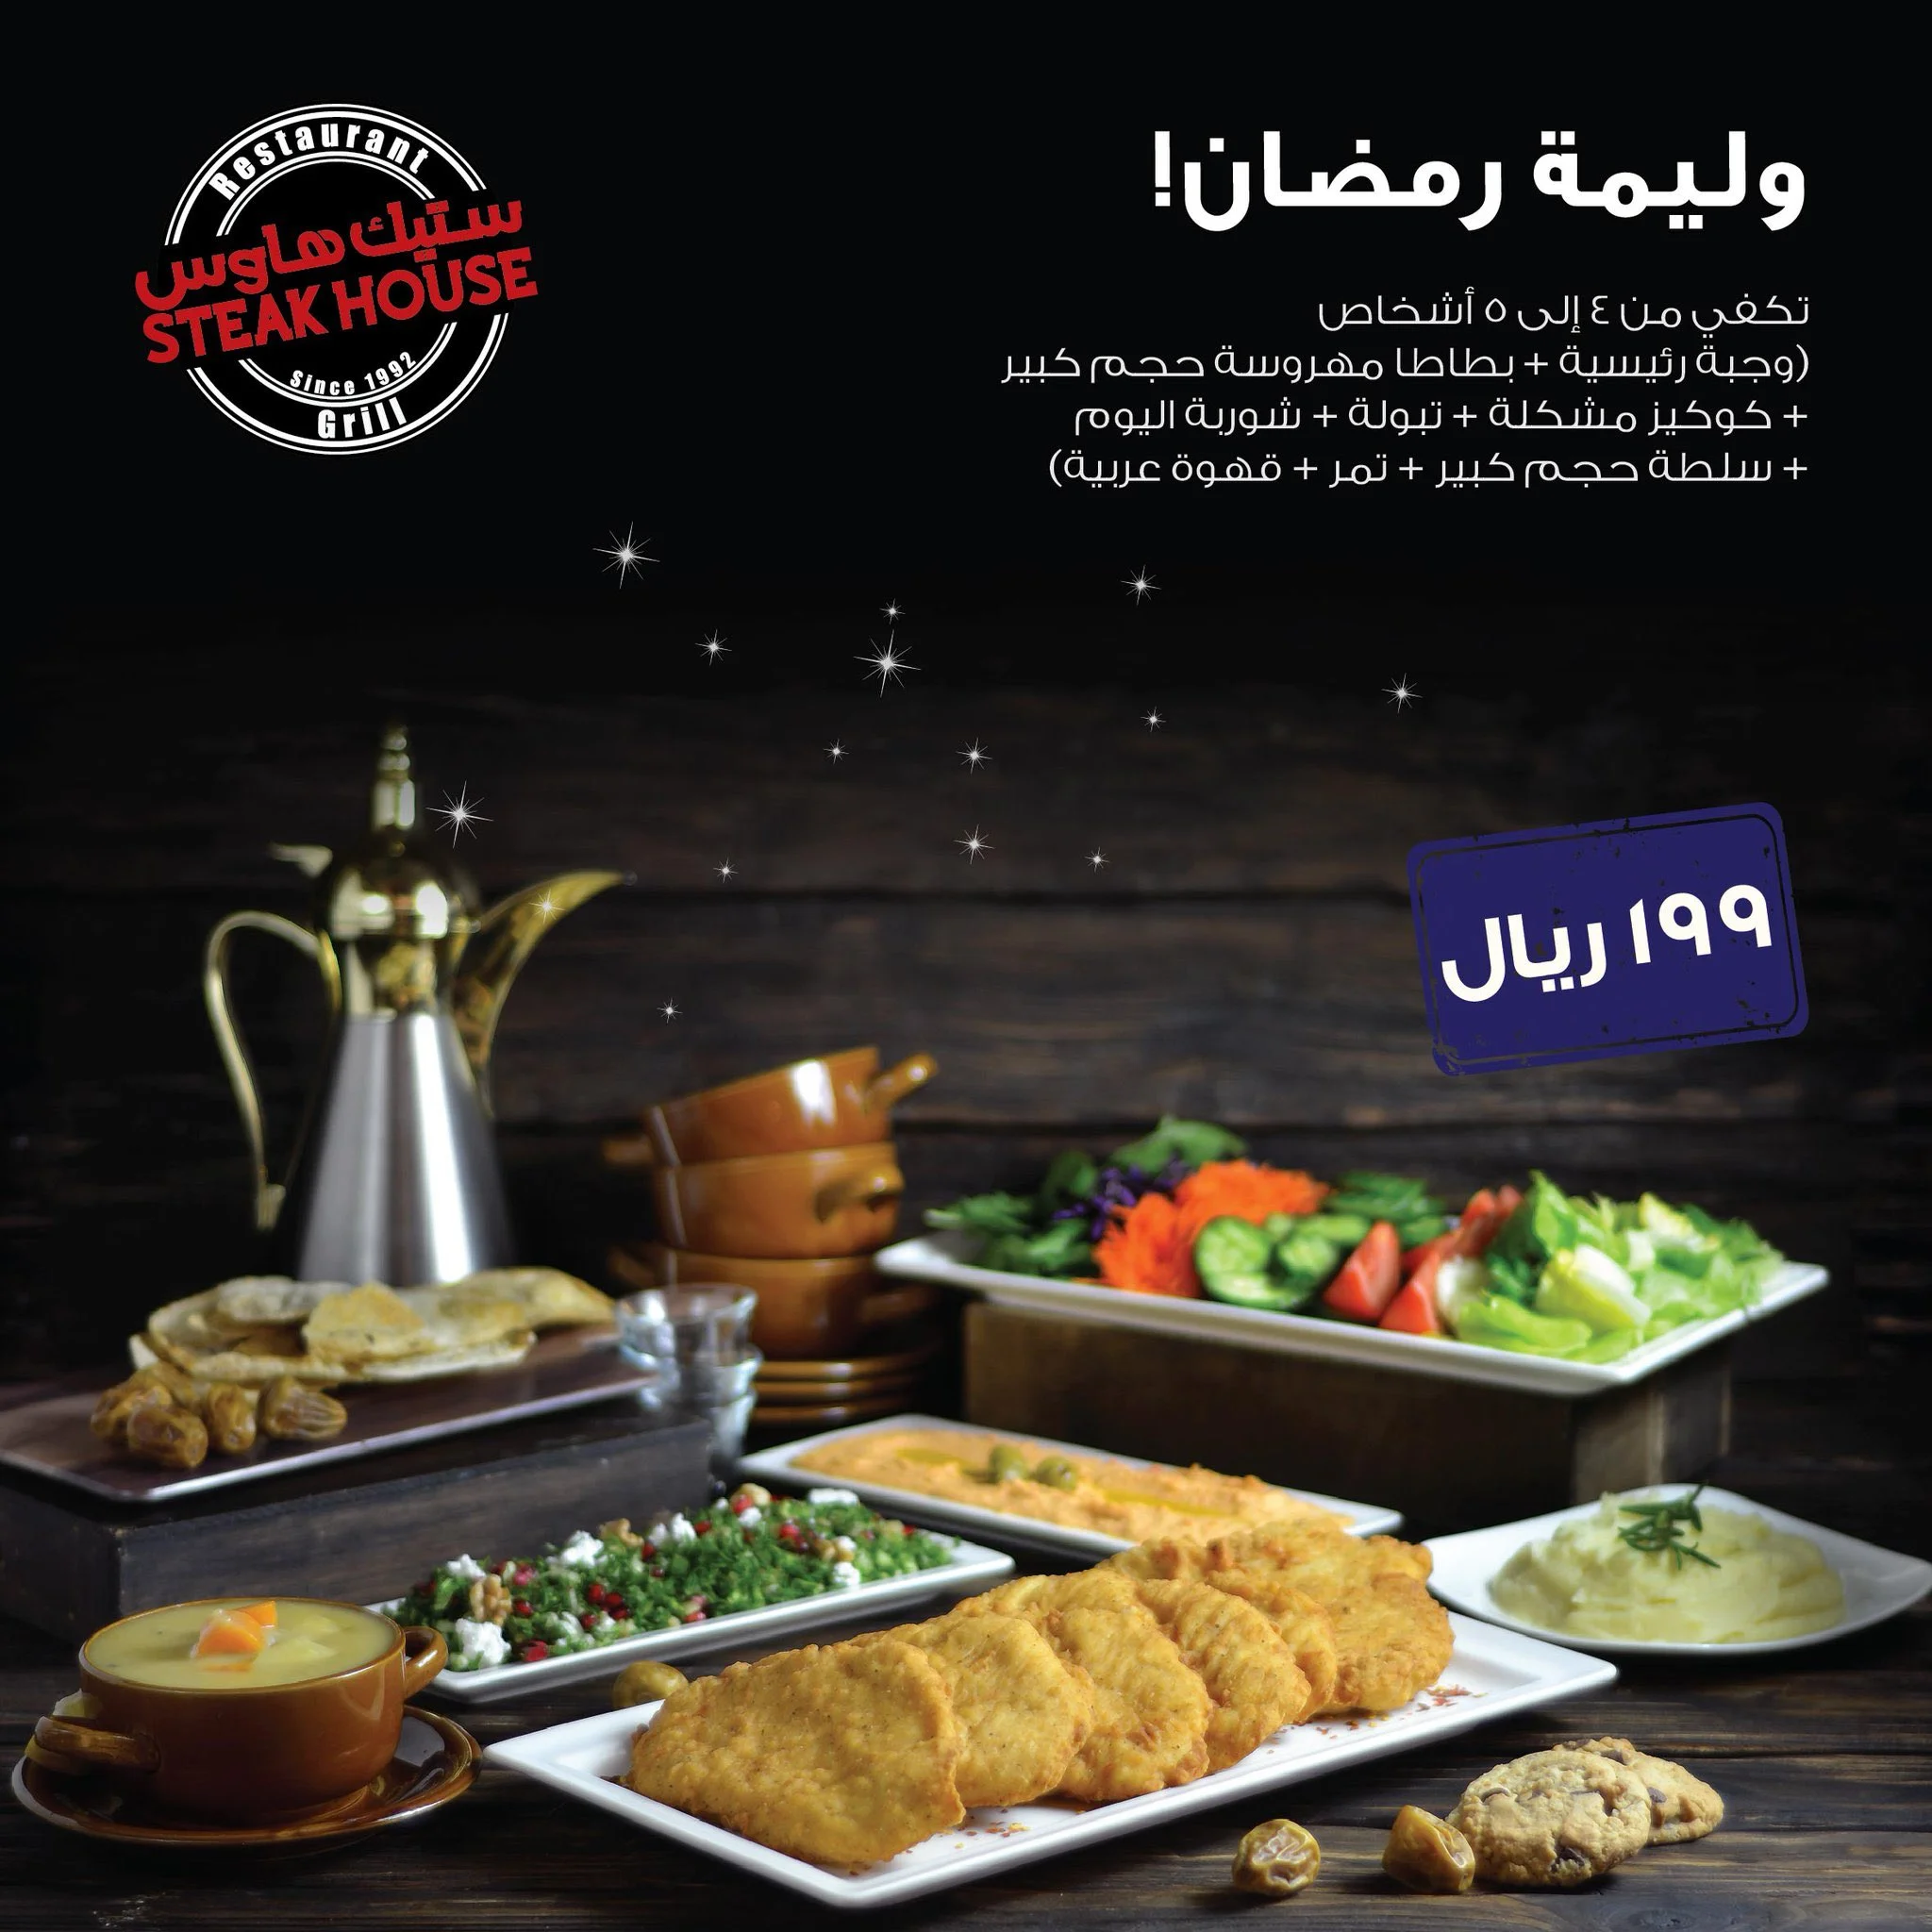 EWZRCZcXYAc8DkW - عروض رمضان : عروض مطاعم ستيك هاوس علي وليمة رمضان بـ 199 ريال سعودي